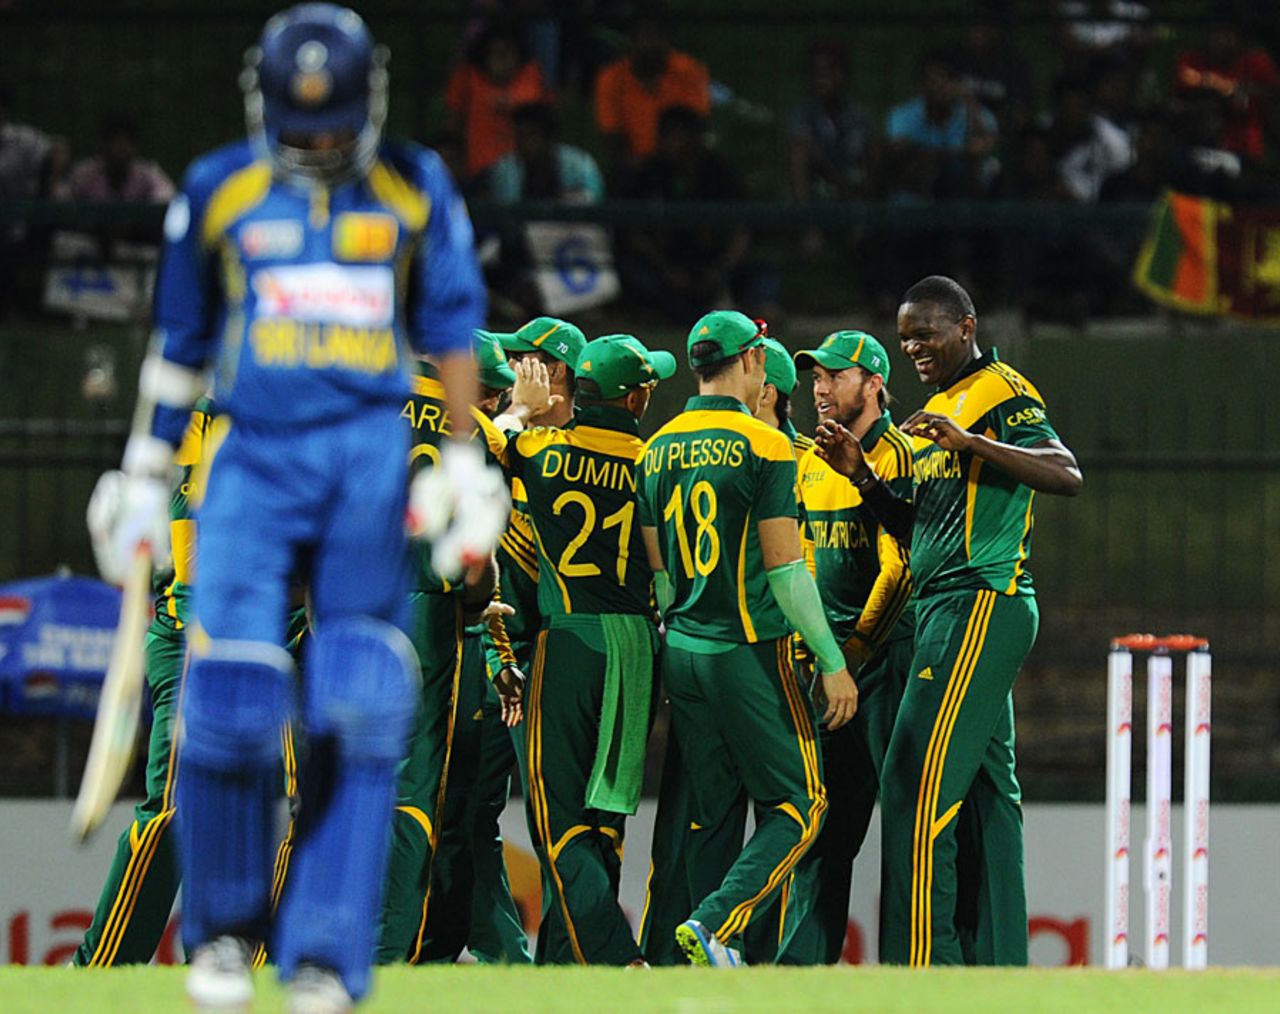 The South Africa team celebrate the wicket of Upul Tharanga, Sri Lanka v South Africa, 3rd ODI, Pallekele, July 26, 2013
